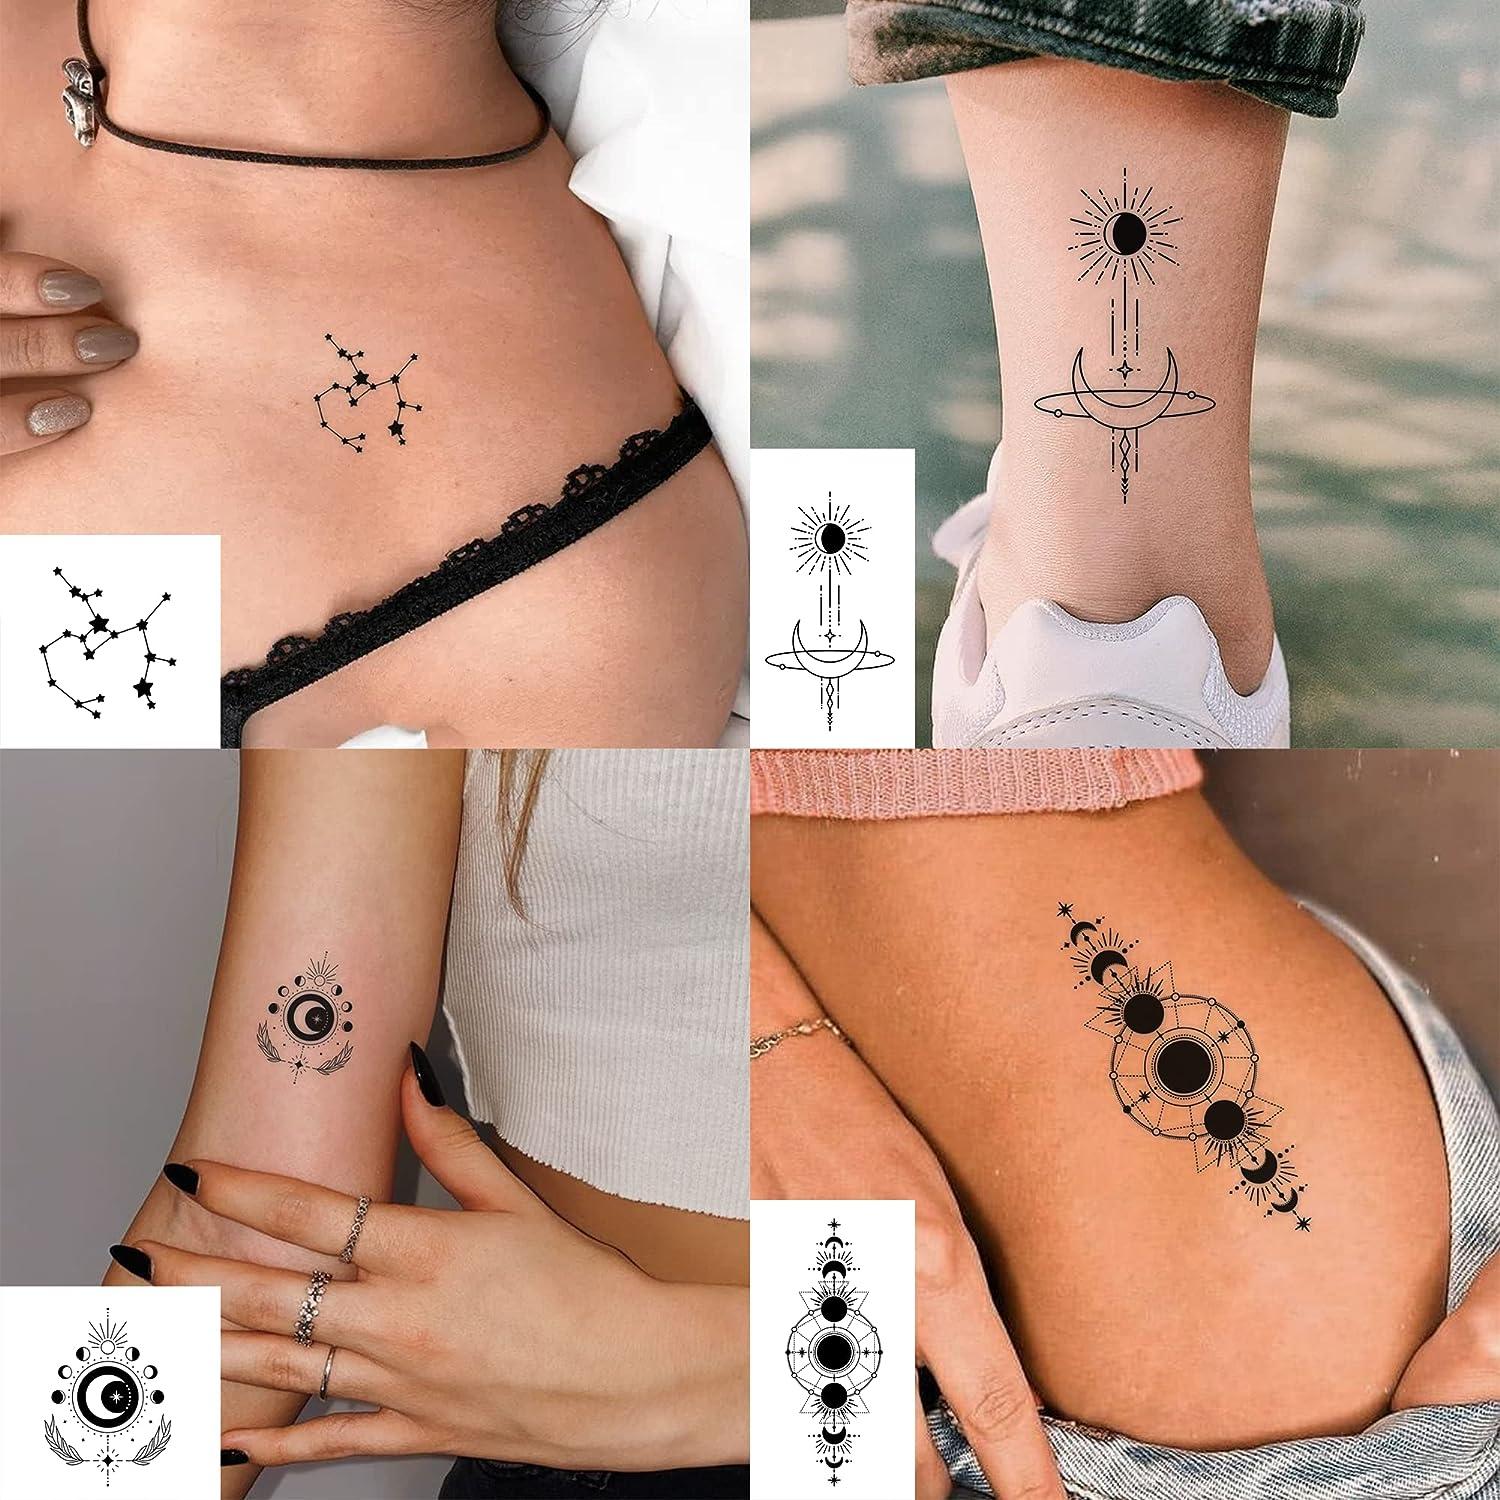 Gemini constellation tattoo located on the pelvis.